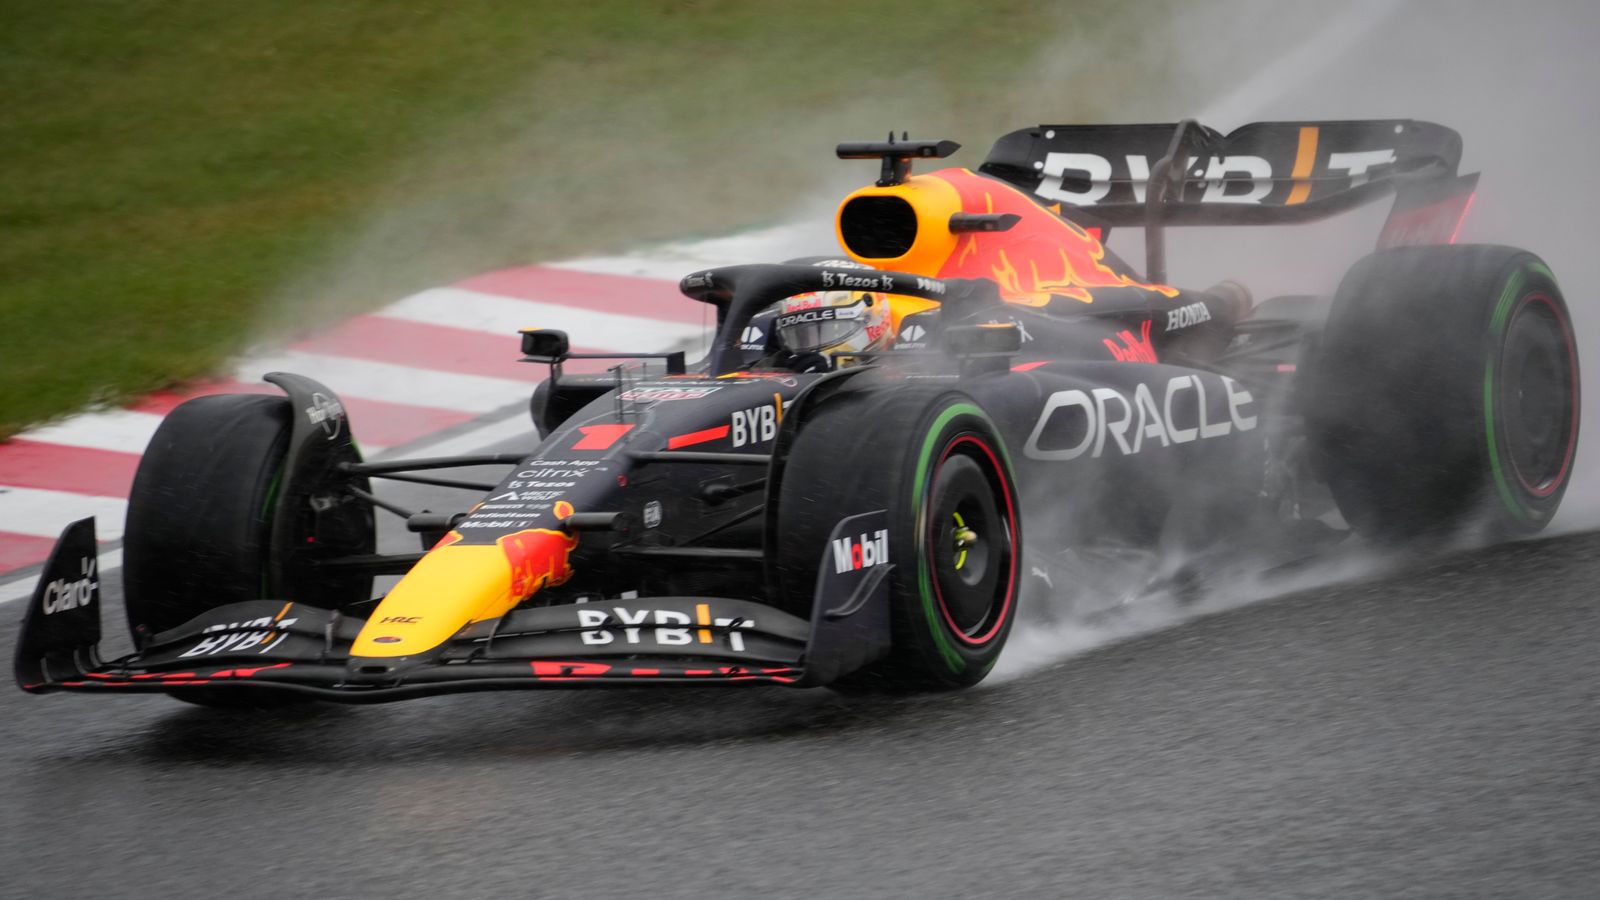 Japanese GP: Max Verstappen crowned world champion after winning rain-shortened Suzuka race